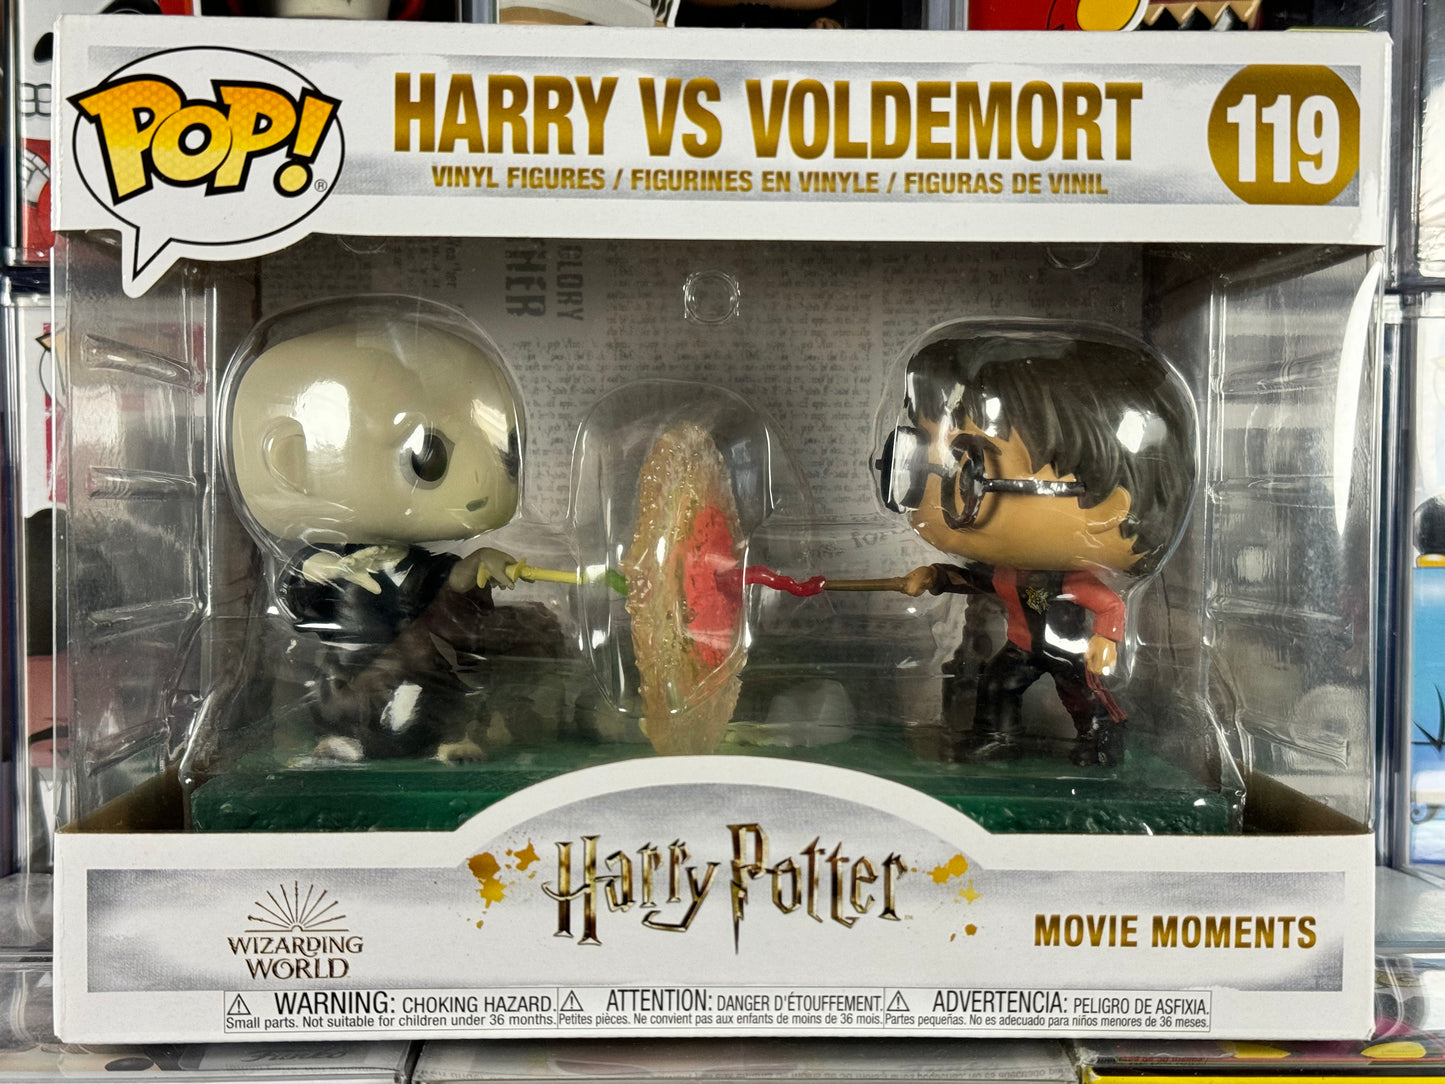 Harry Potter - Moment - Harry vs Voldemort (119)